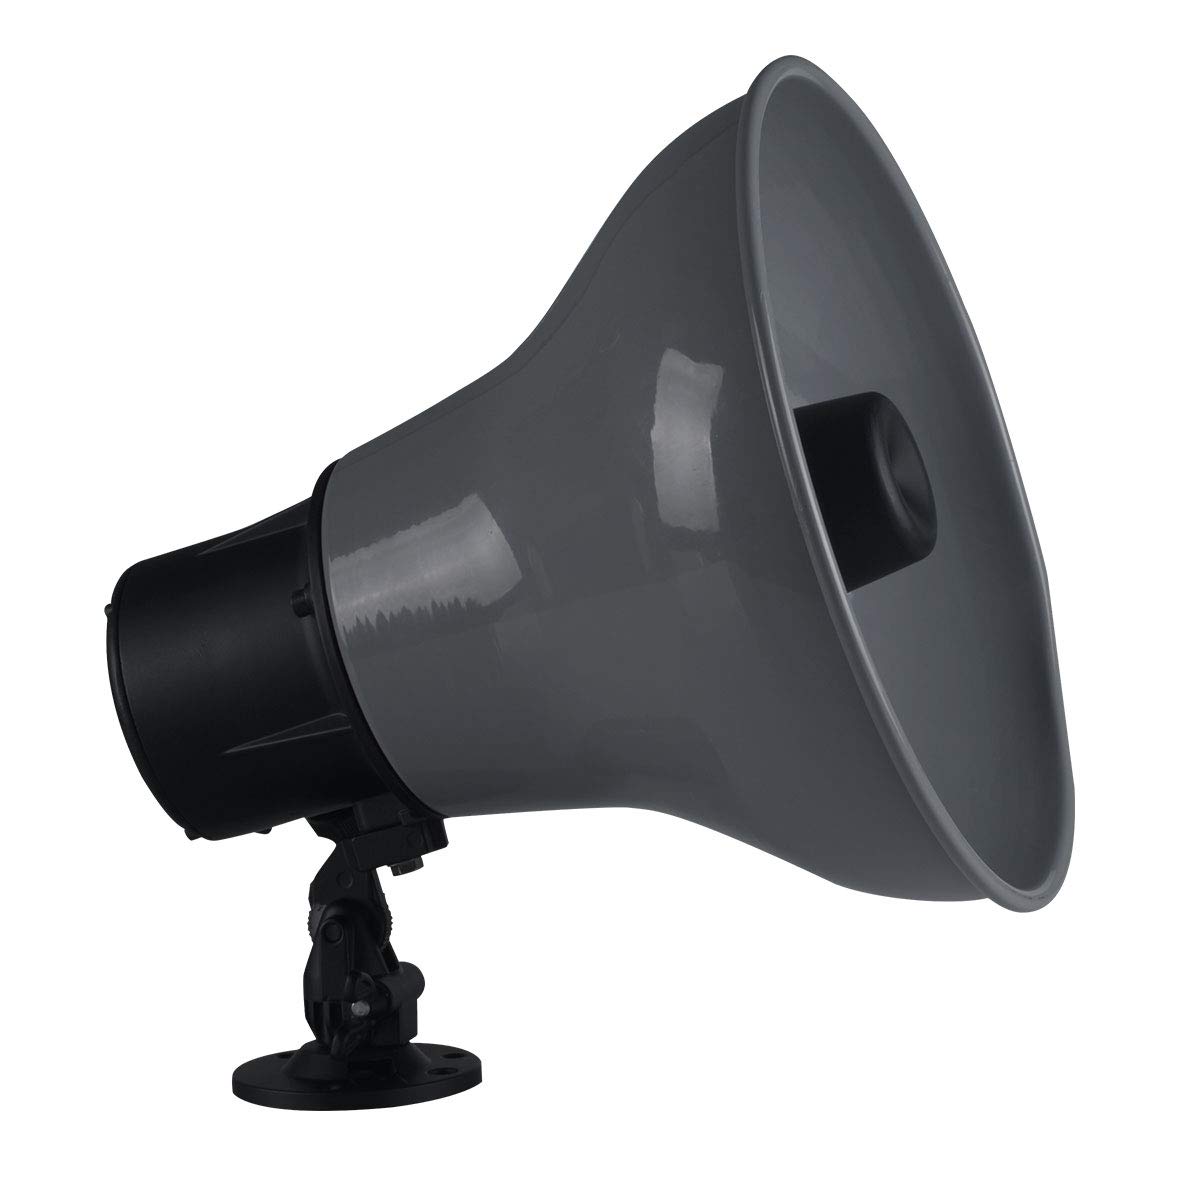 Network-Horn-Speaker-SH30 view a